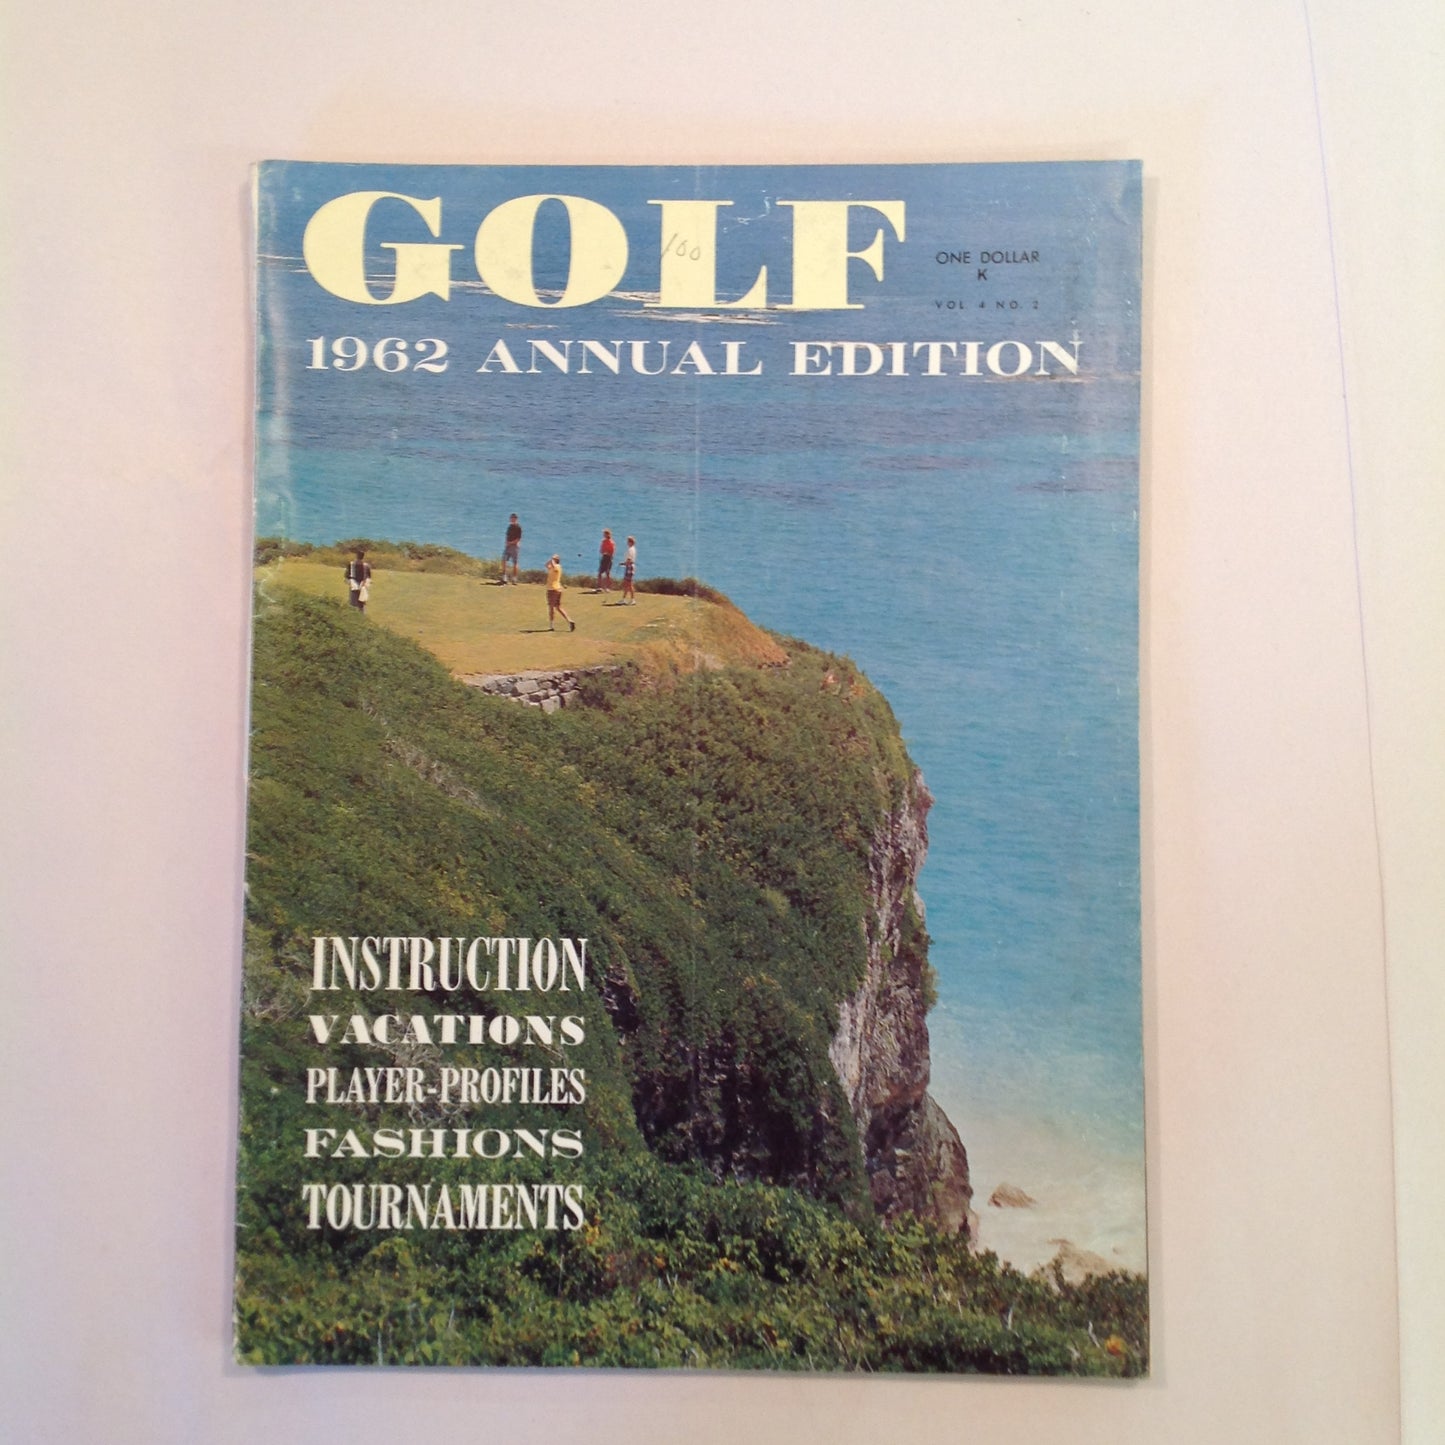 Vintage 1962 GOLF Magazine Annual Edition Vol 4 No 2 Instruction Vacation Player-Profile Fashion Tournaments Rare